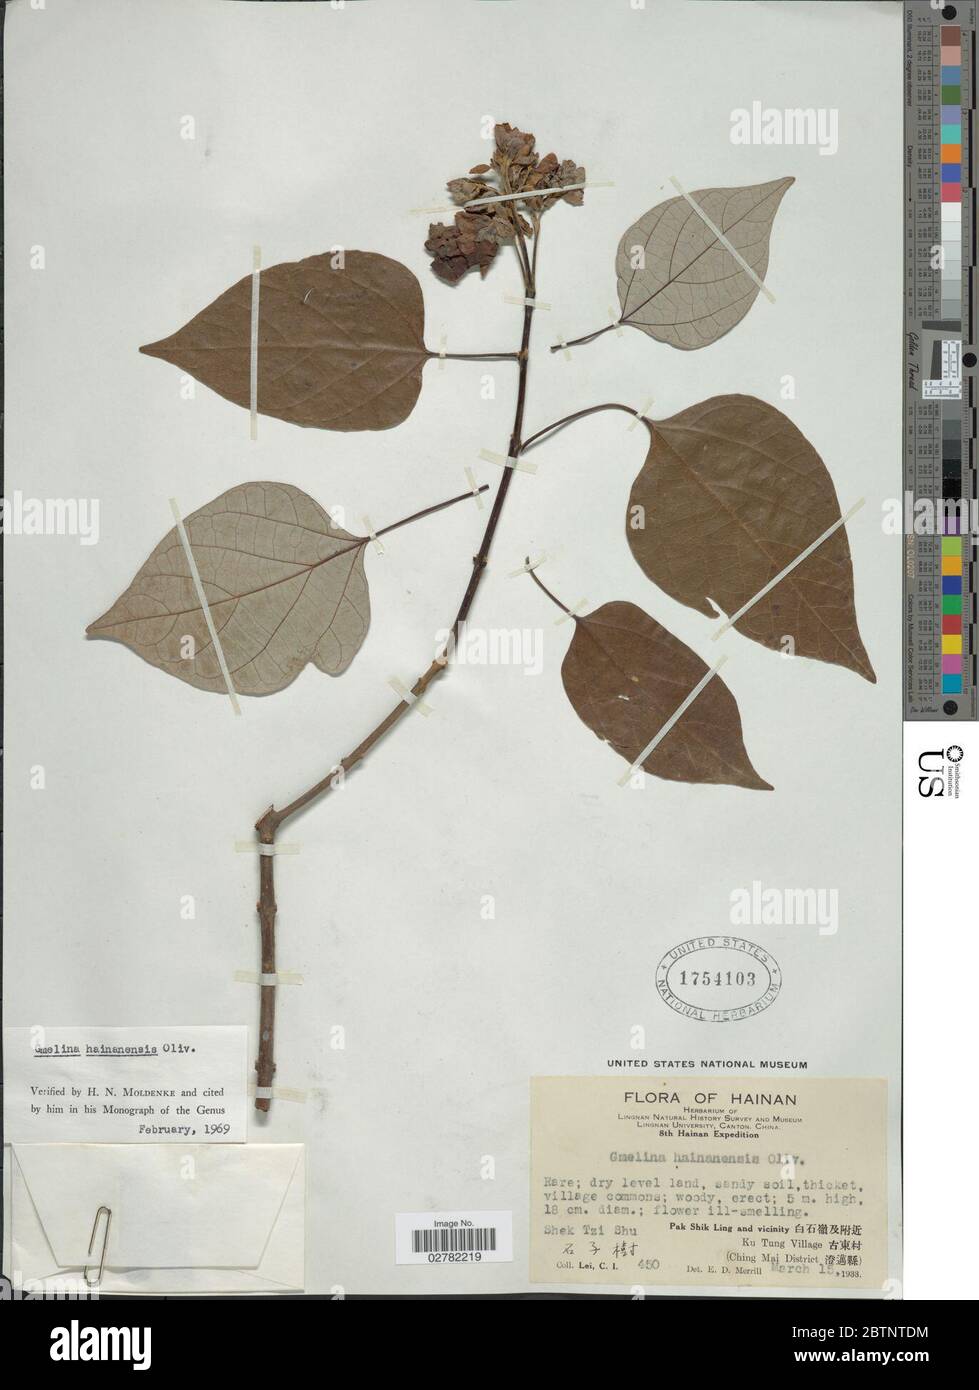 Gmelina hainanensis Oliv. Stock Photo